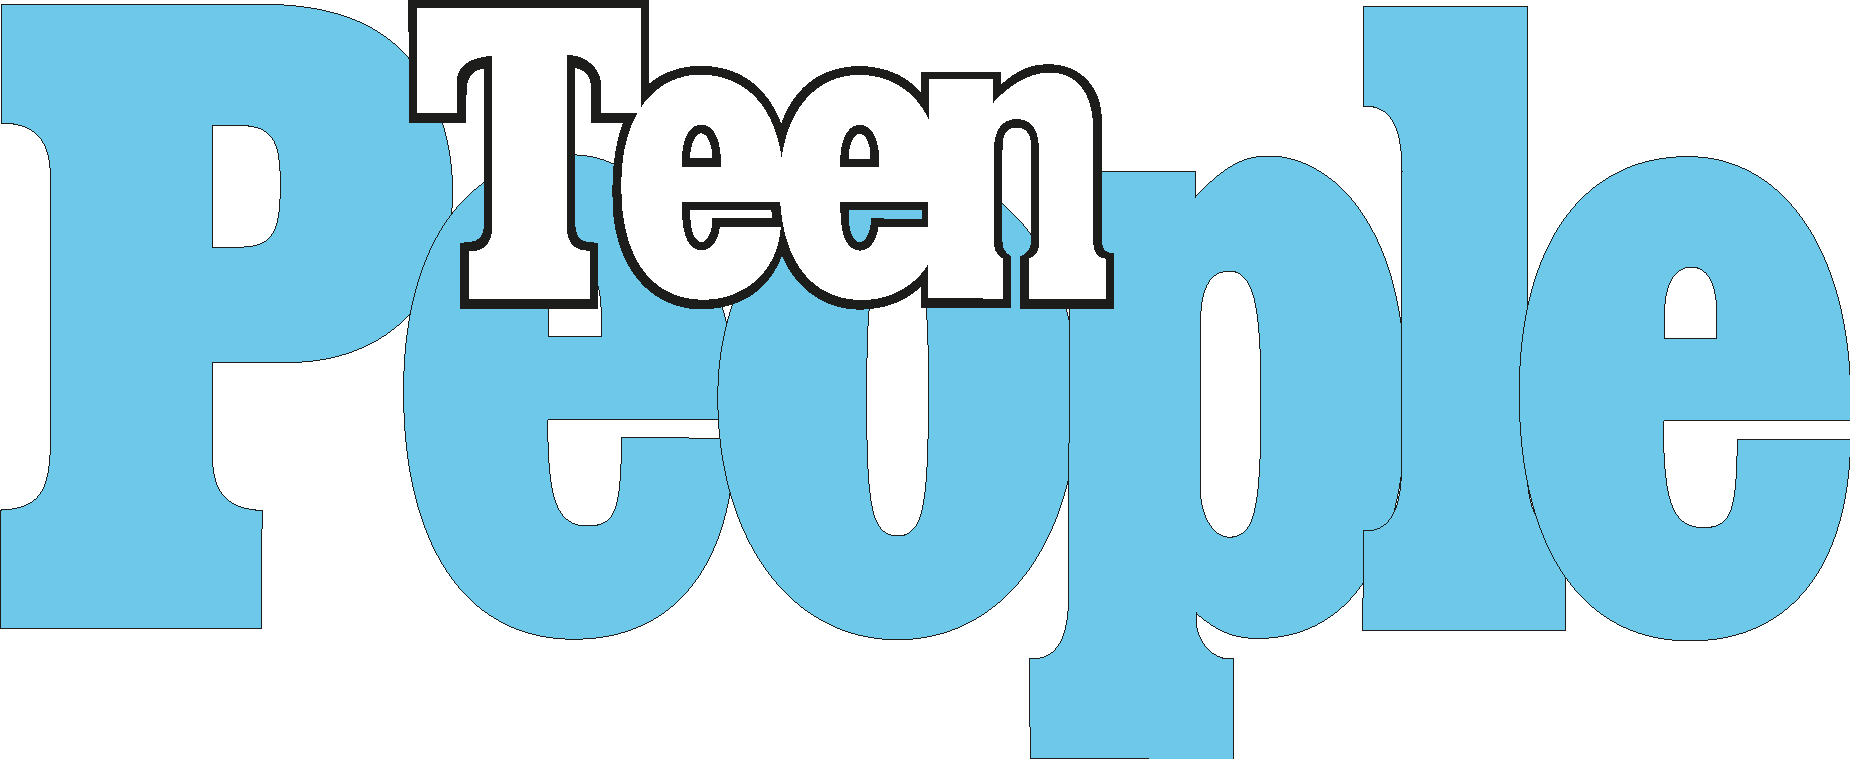 Teen png. Логотип teenager. Журнал people логотип. Фэшн пипл лого. 2000s надпись.